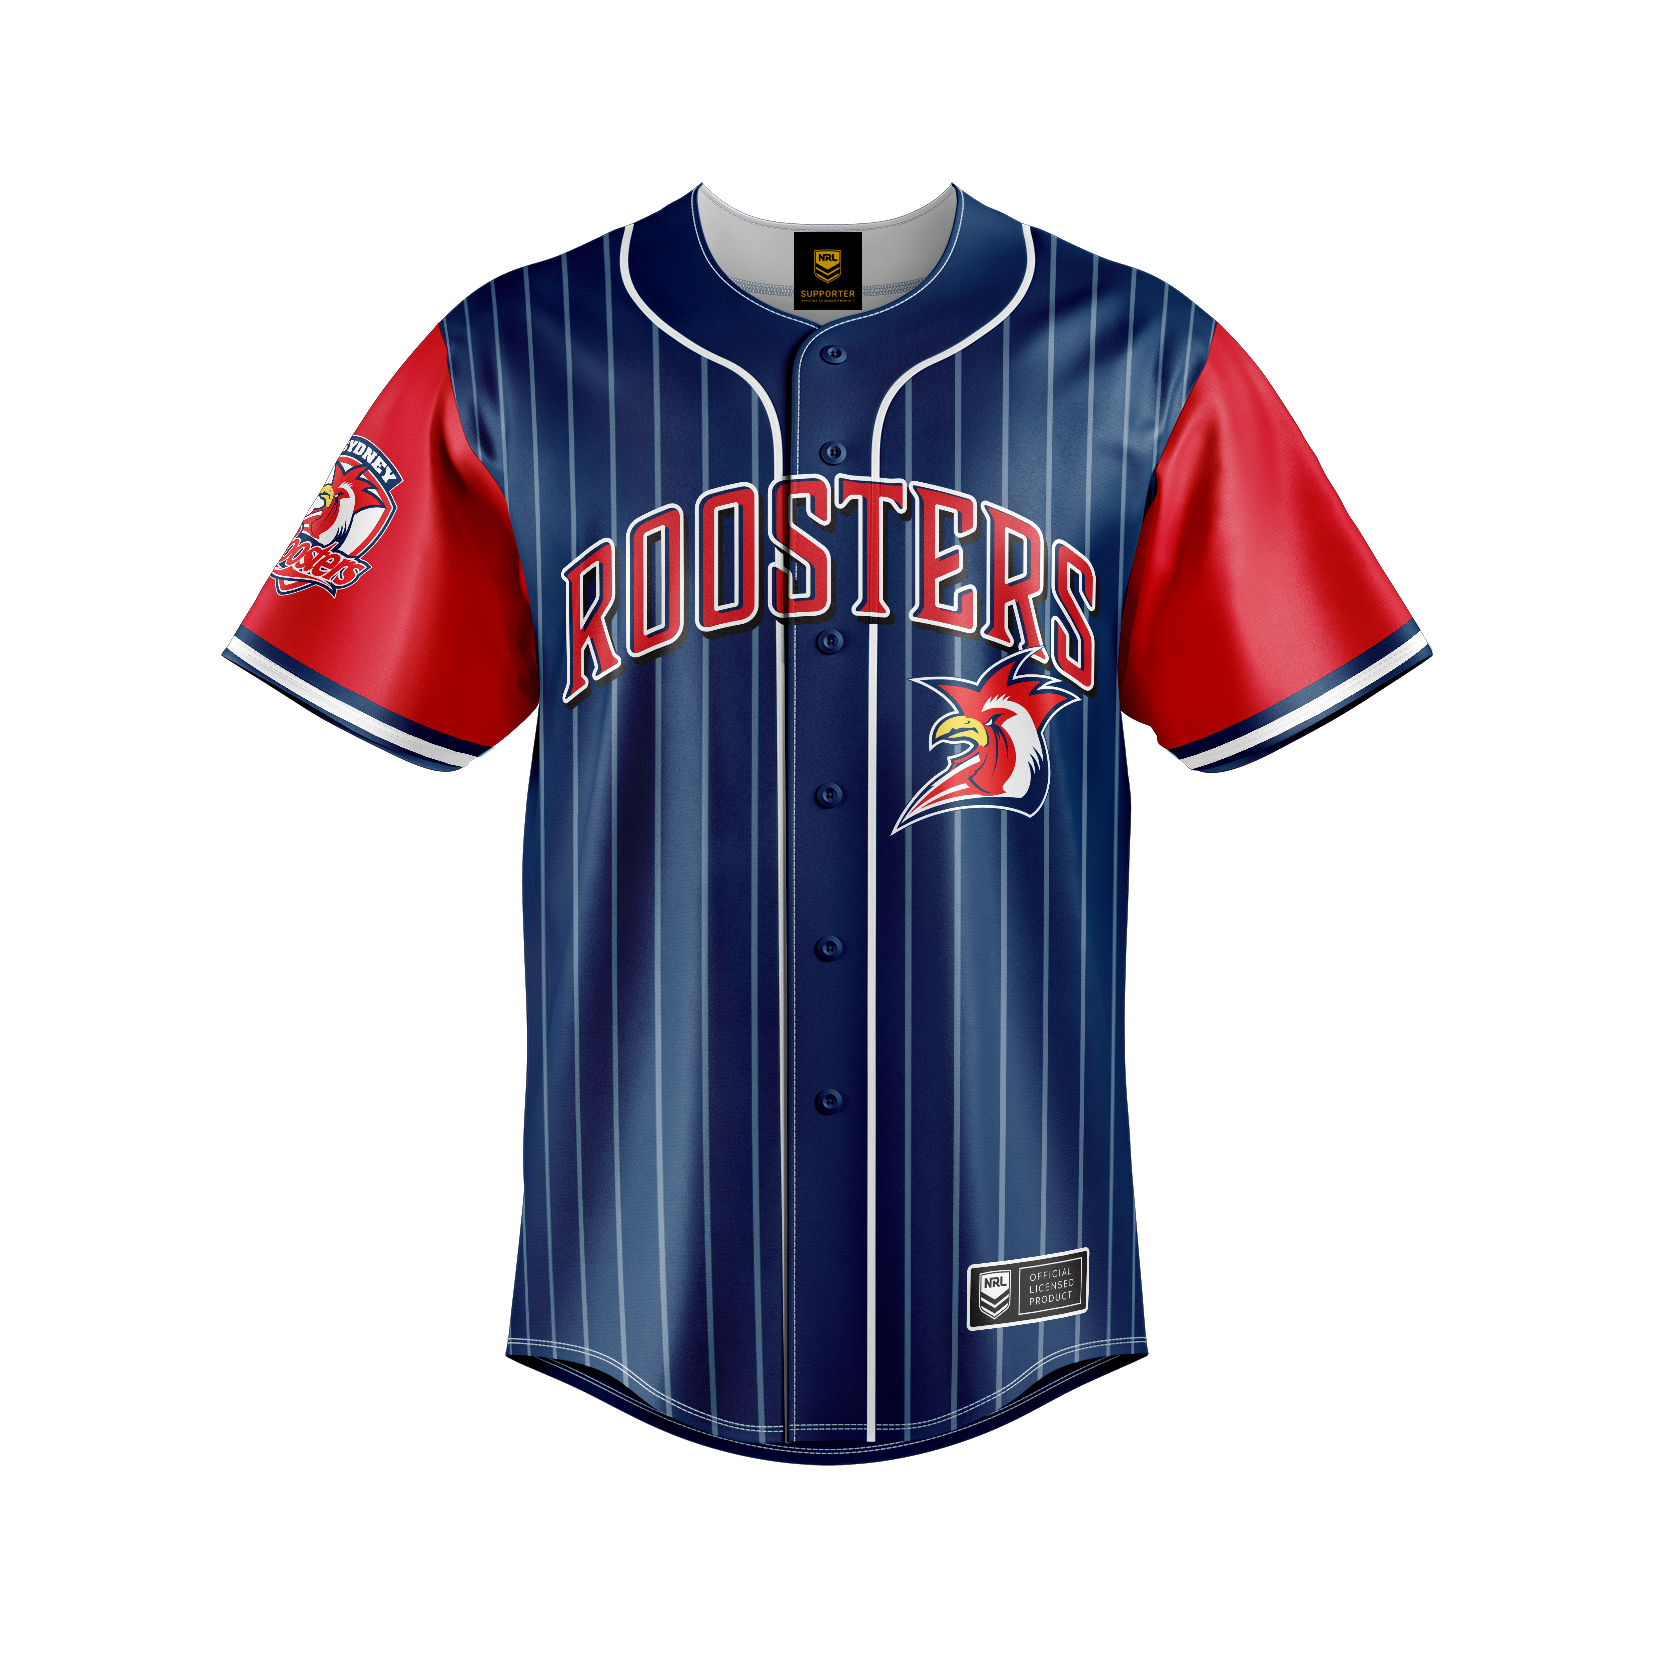 Sydney Roosters "Slugger" Baseball Shirt